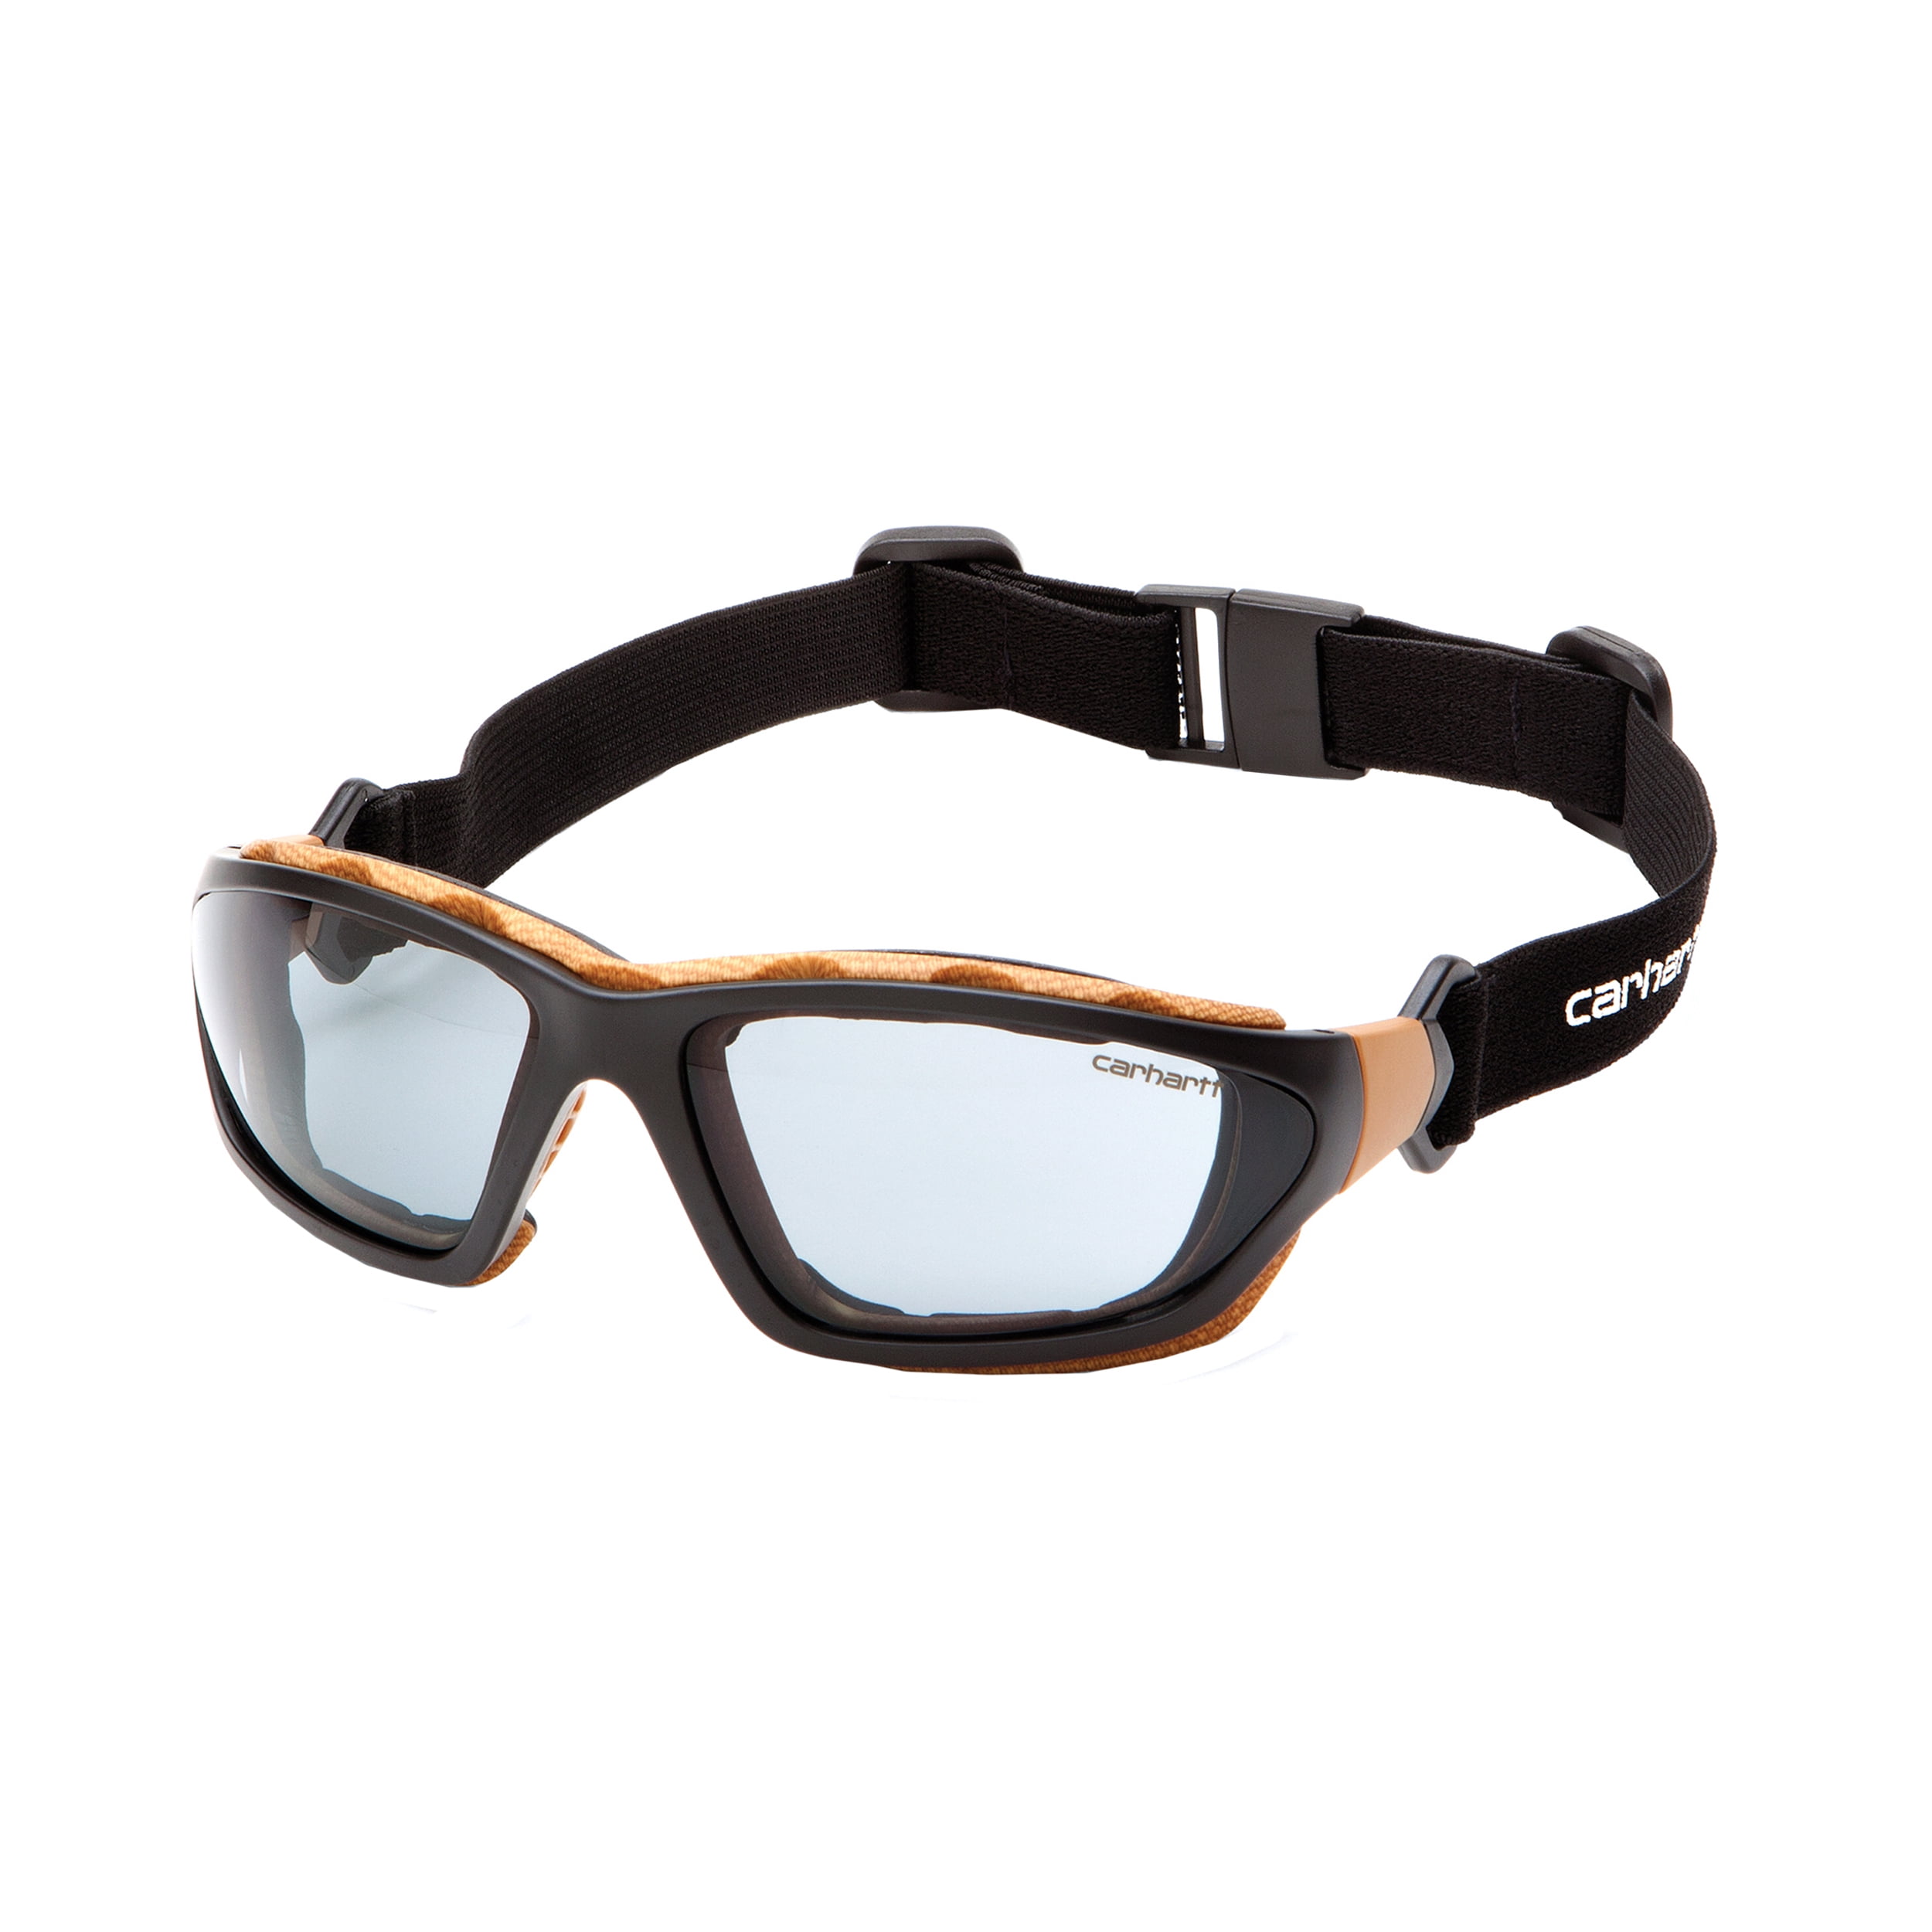 safety glasses carhartt tinted protective eyewear ansi z87 